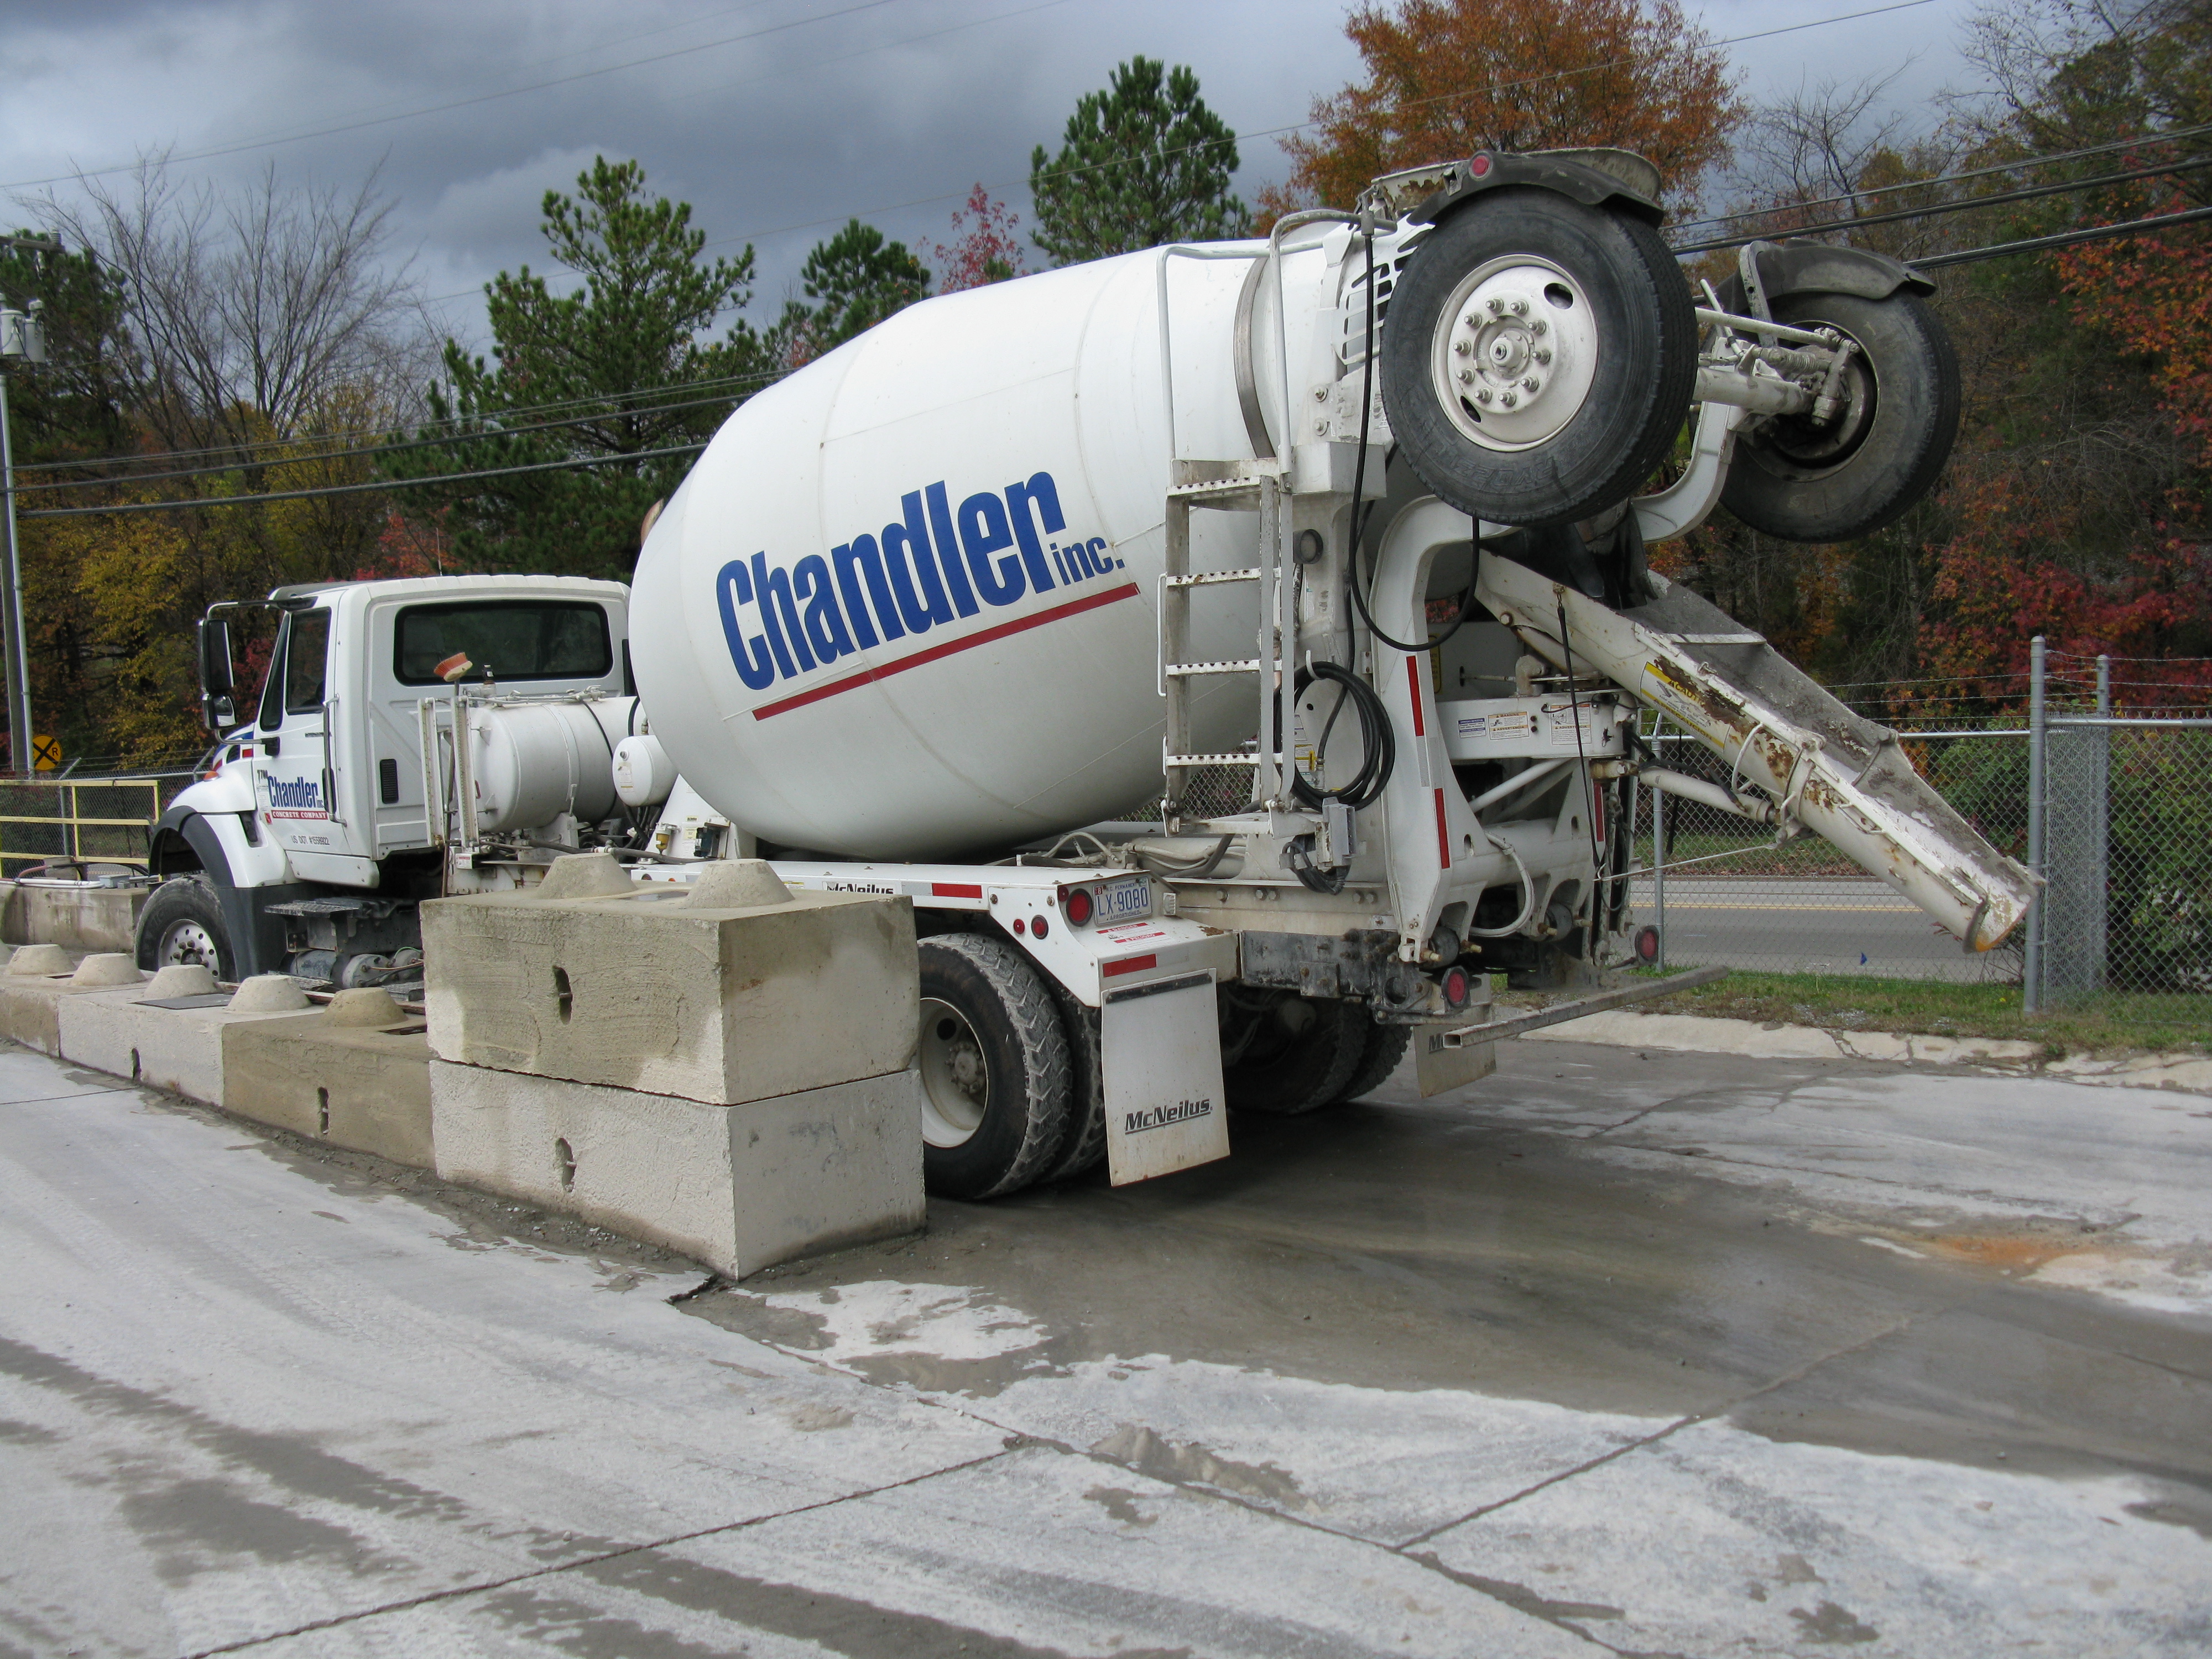 Chandler Concrete, International #120 | Flickr - Photo Sharing!